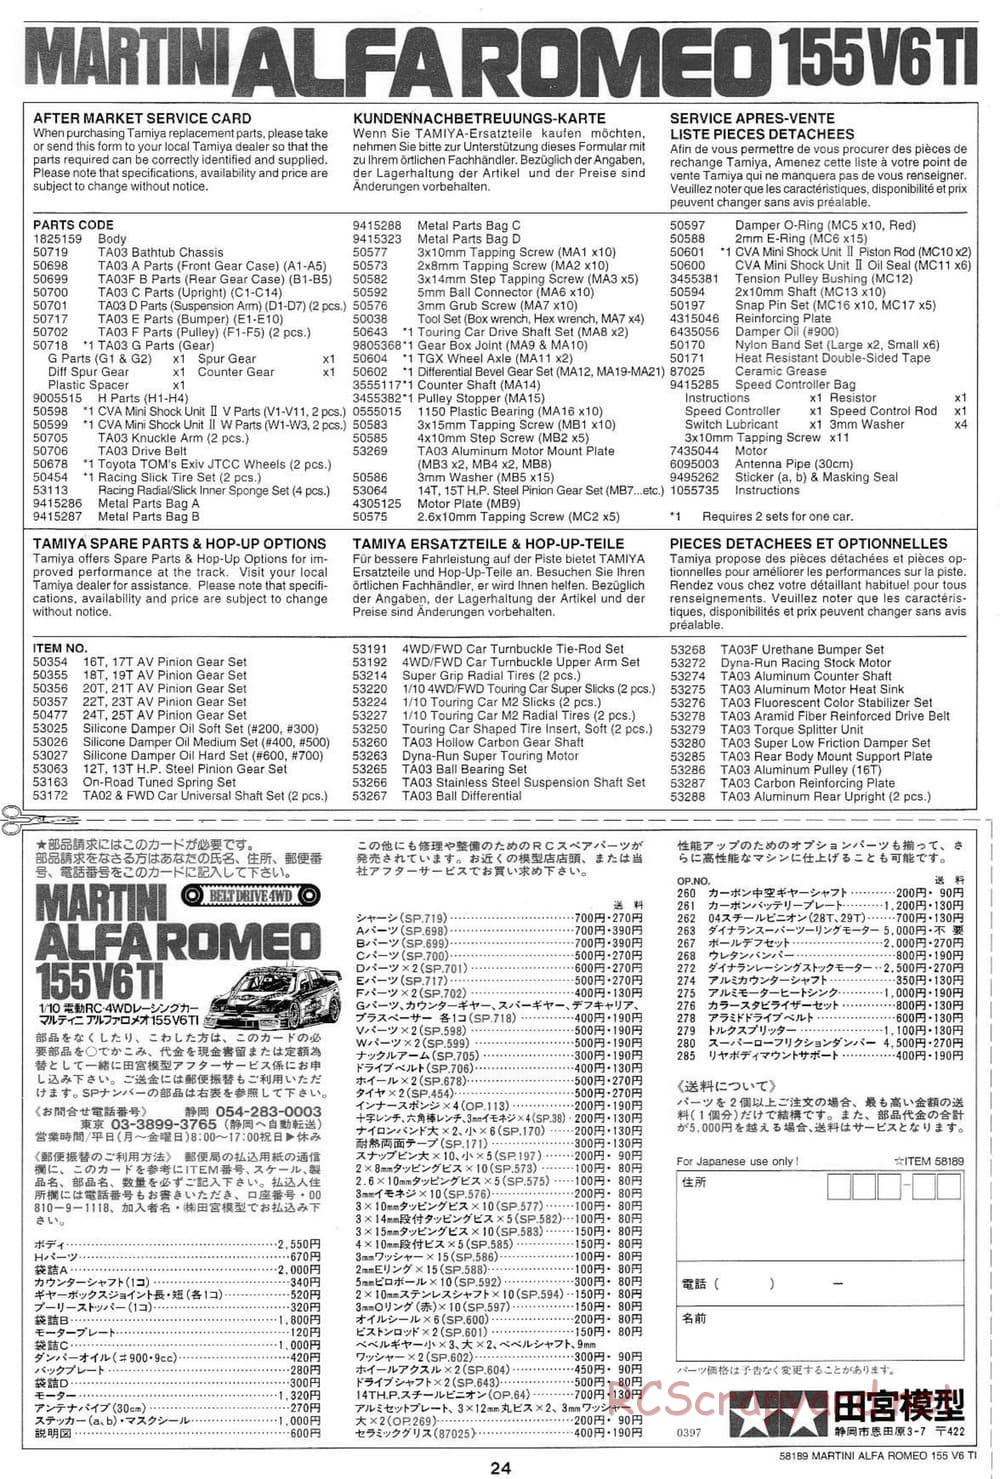 Tamiya - Martini Alfa Romeo 155 V6 TI - TA-03F Chassis - Manual - Page 24